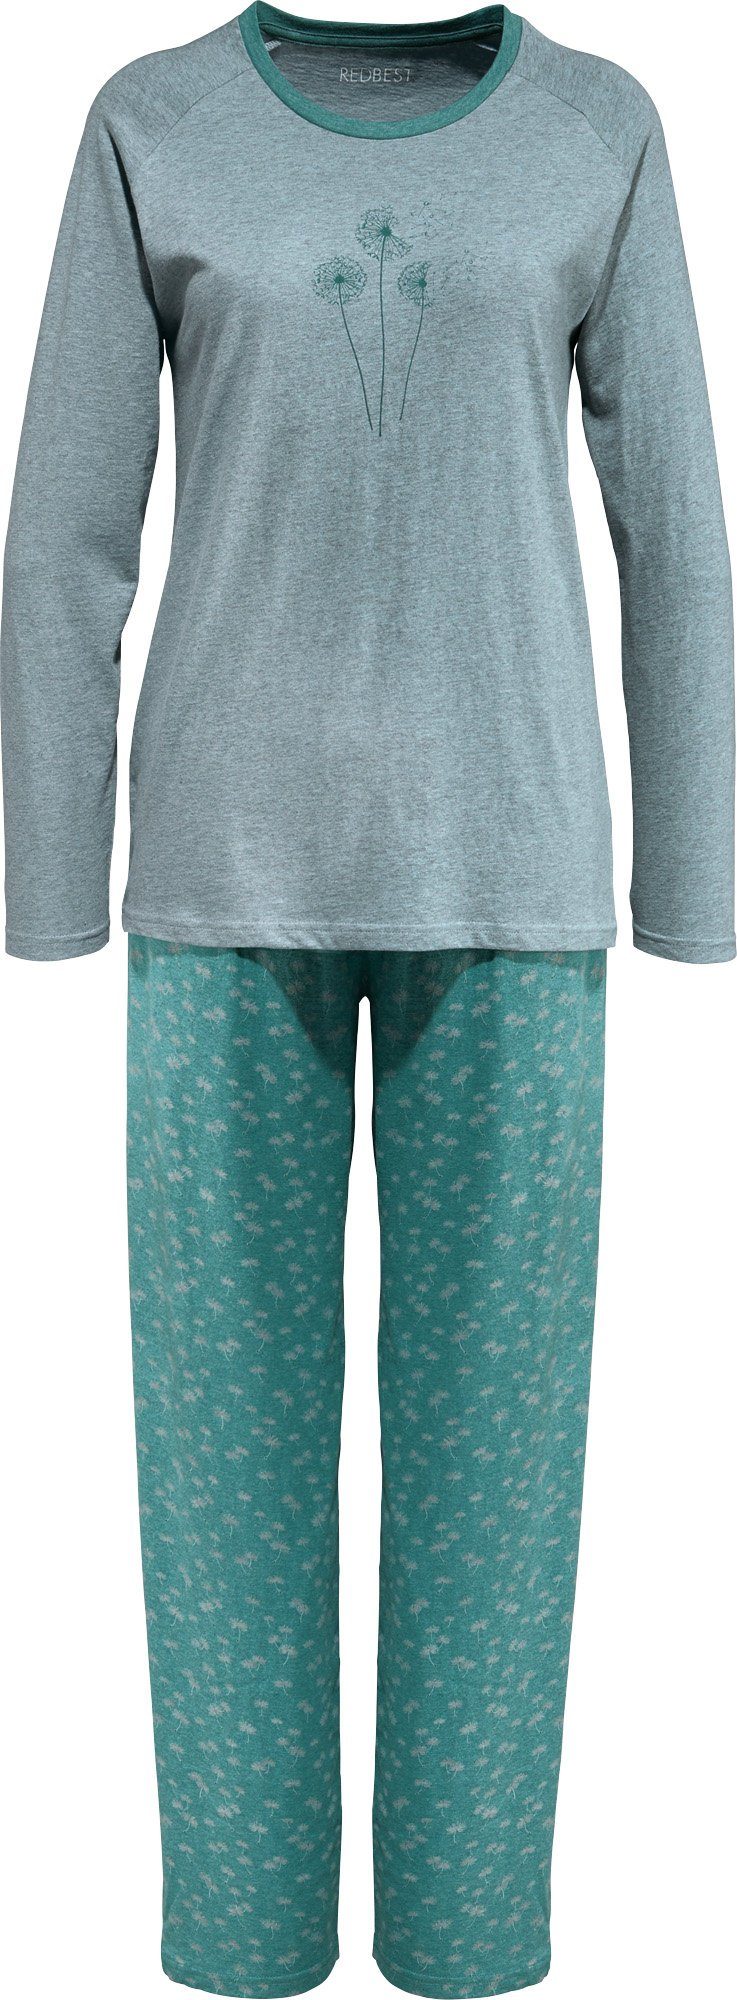 REDBEST Pyjama Damen-Schlafanzug Single-Jersey Blumen